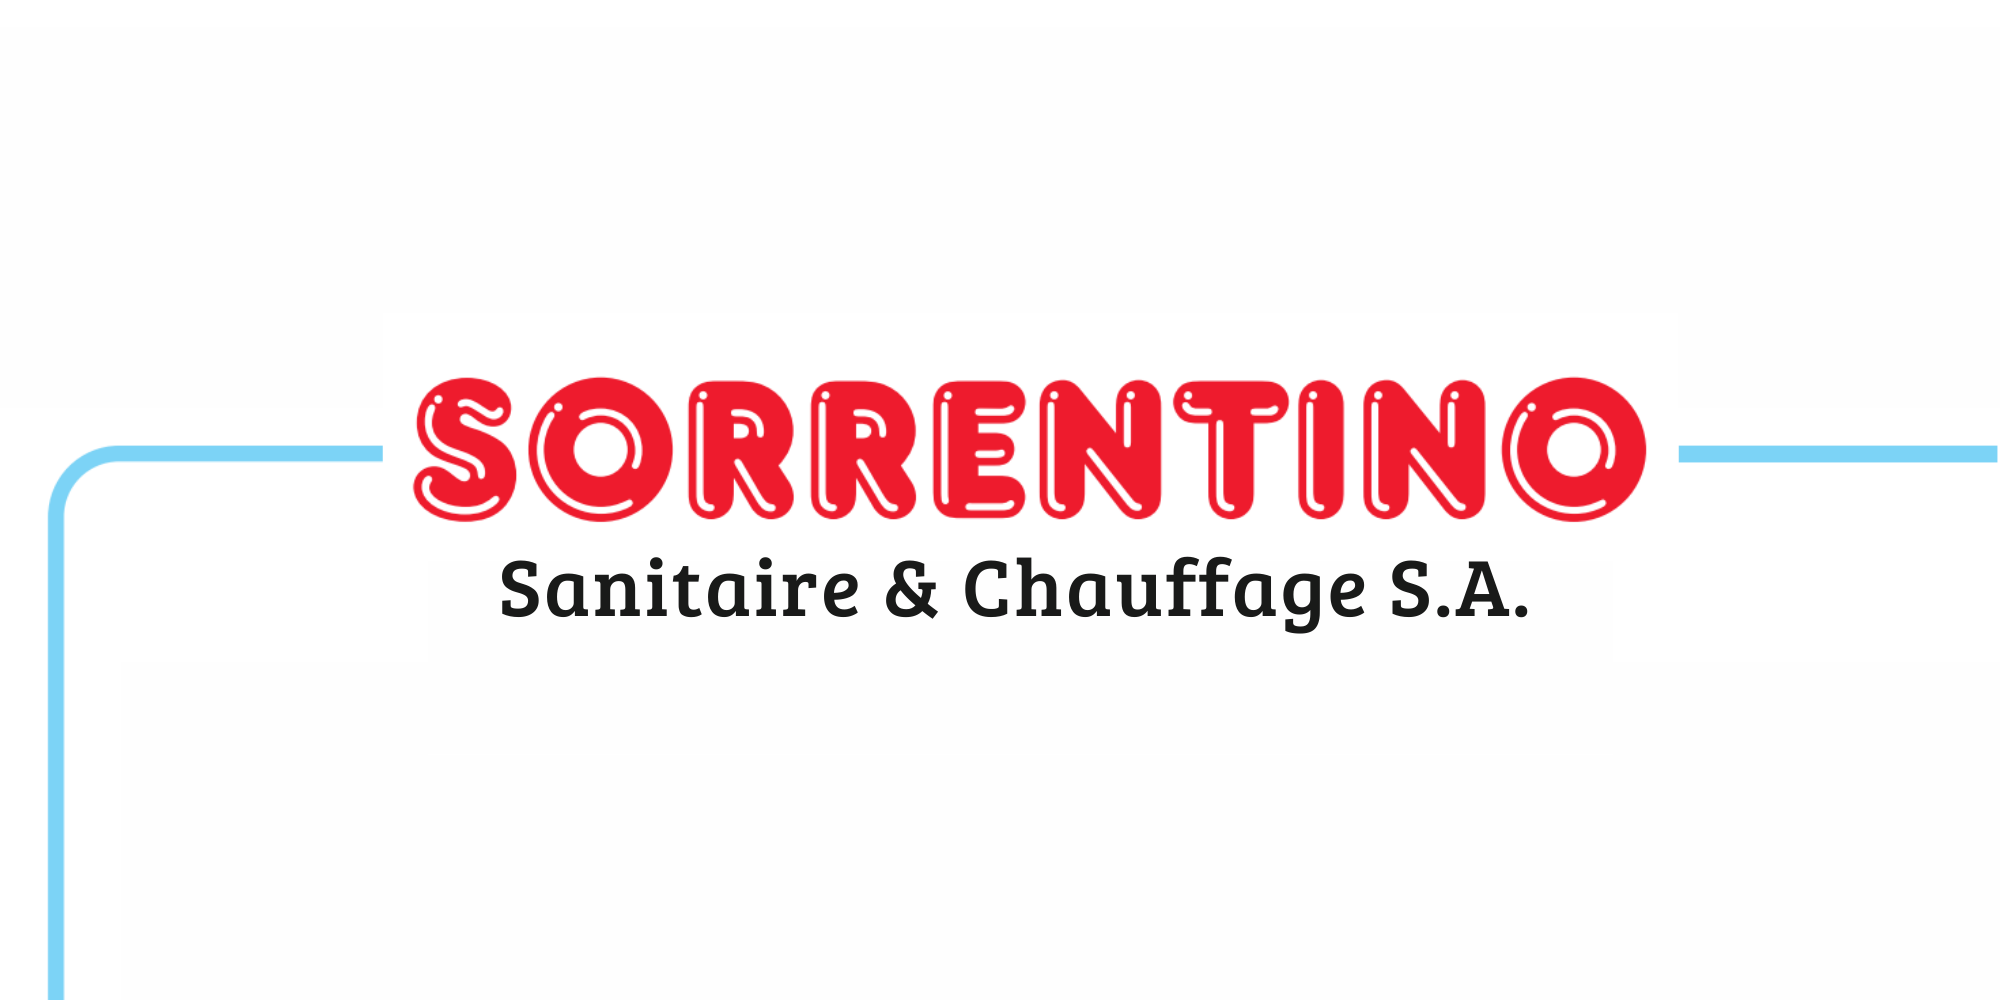 Sorrentino Sanitaire et Chauffage SA sans maj (2)